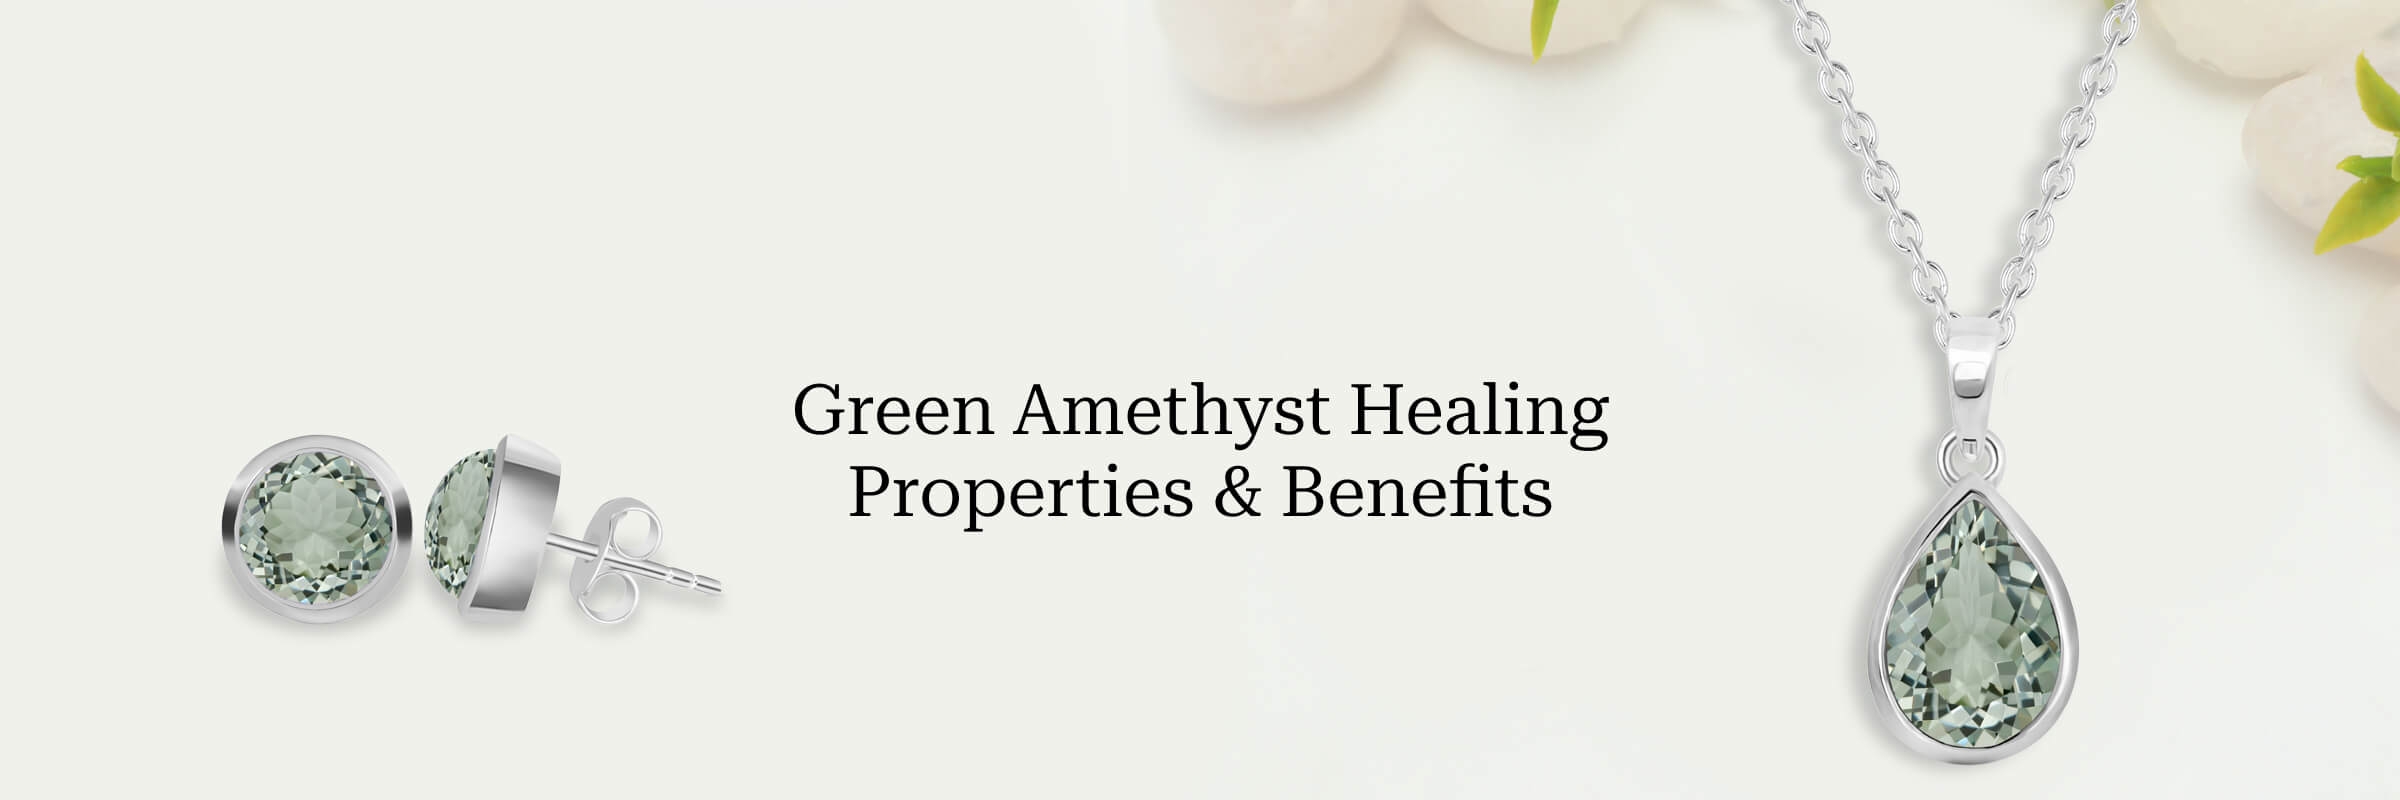 Benefits Of Green Amethyst